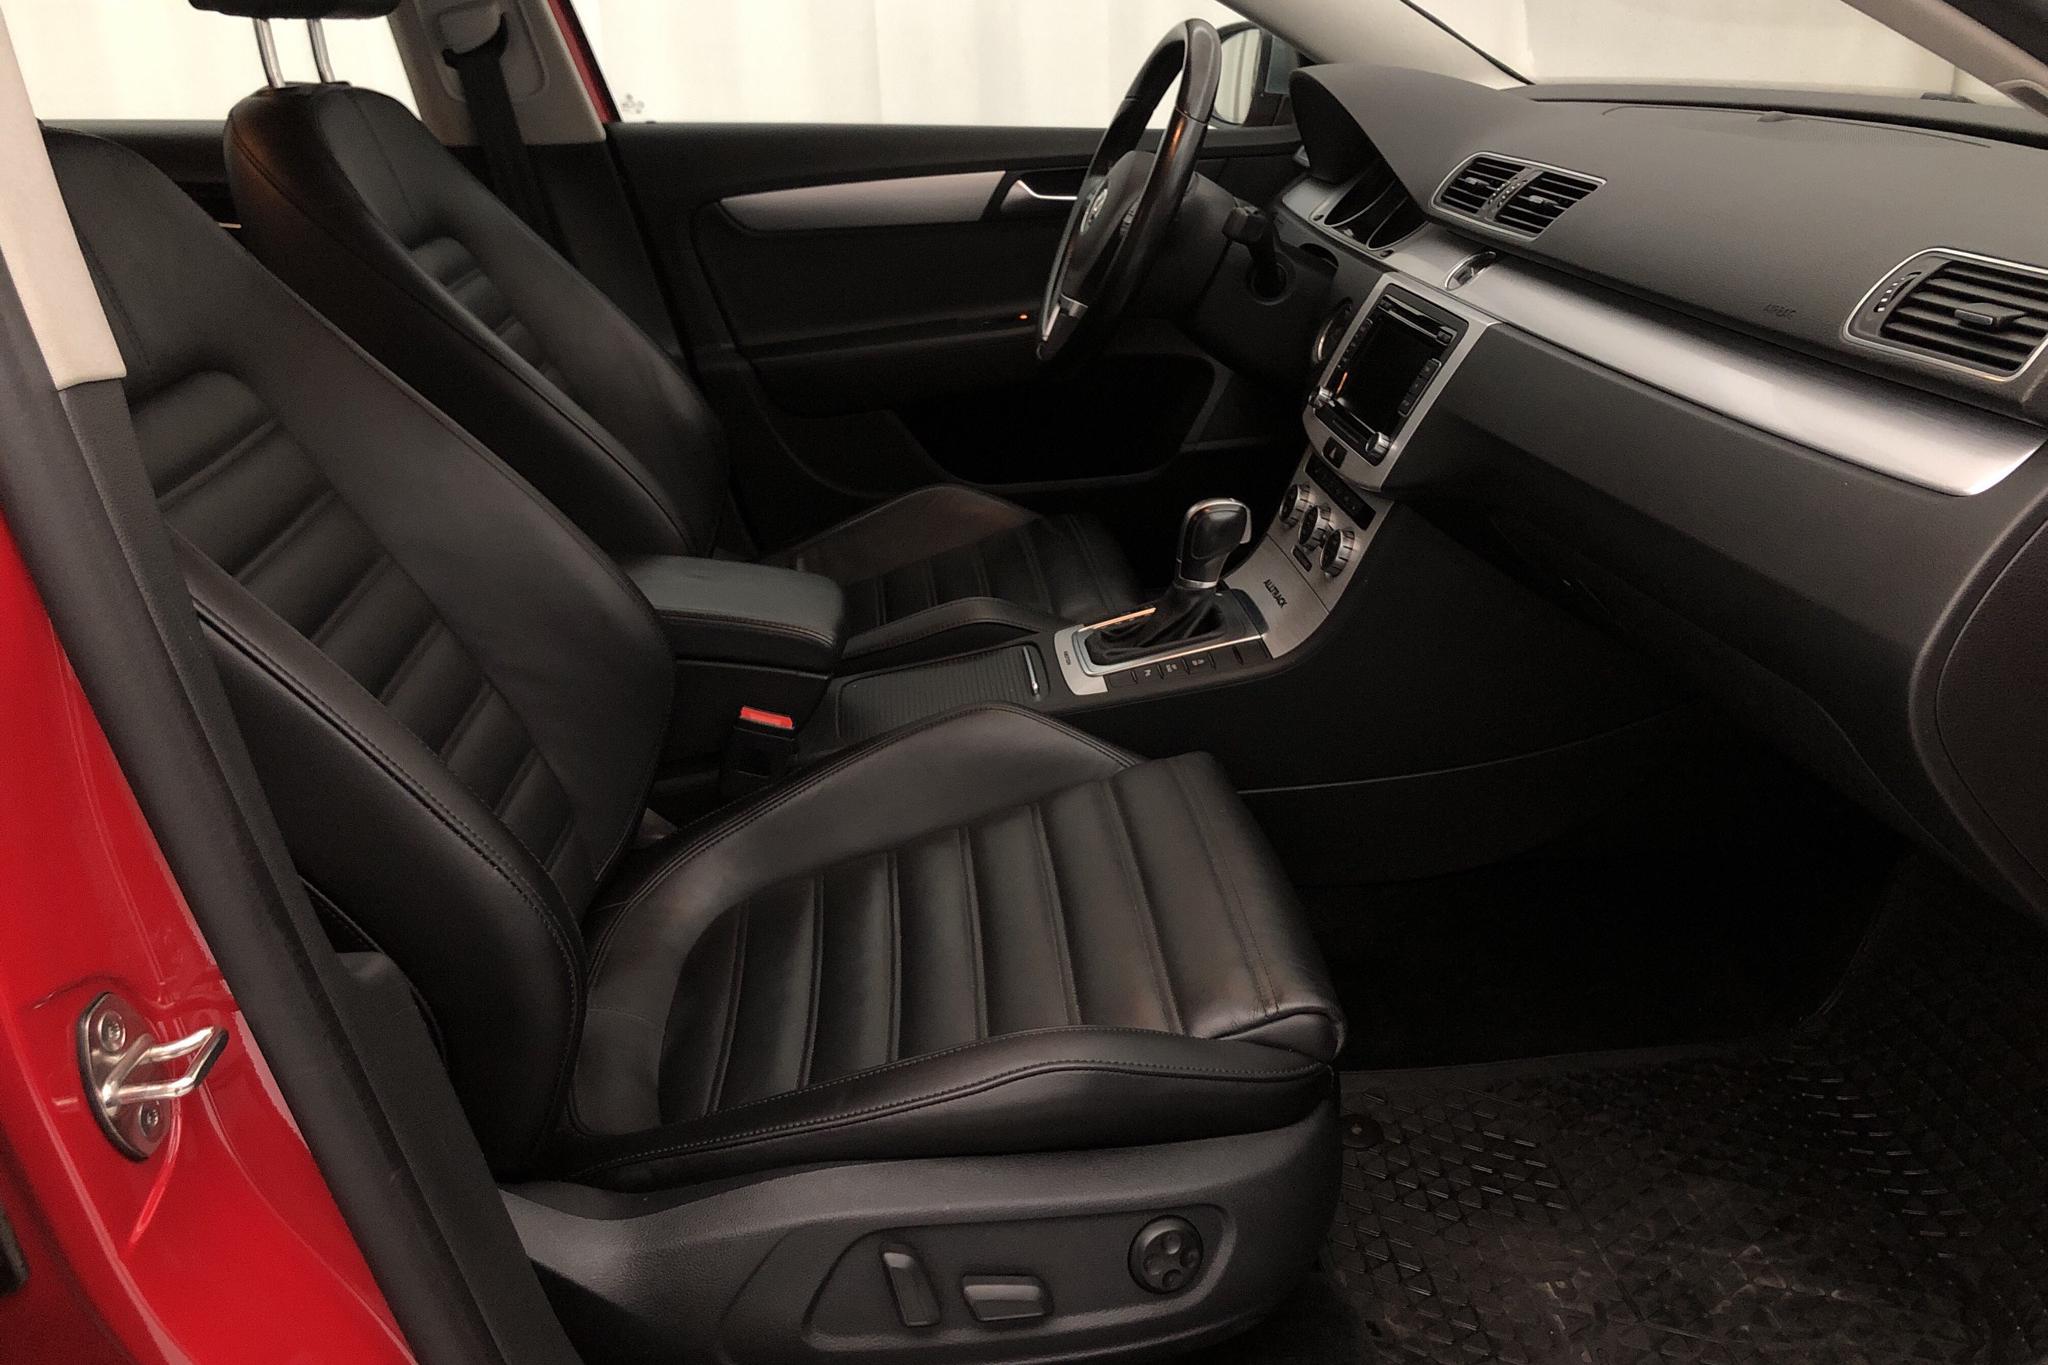 VW Passat Alltrack 2.0 TDI BlueMotion Technology 4Motion (177hk) - 137 000 km - Automatic - red - 2015